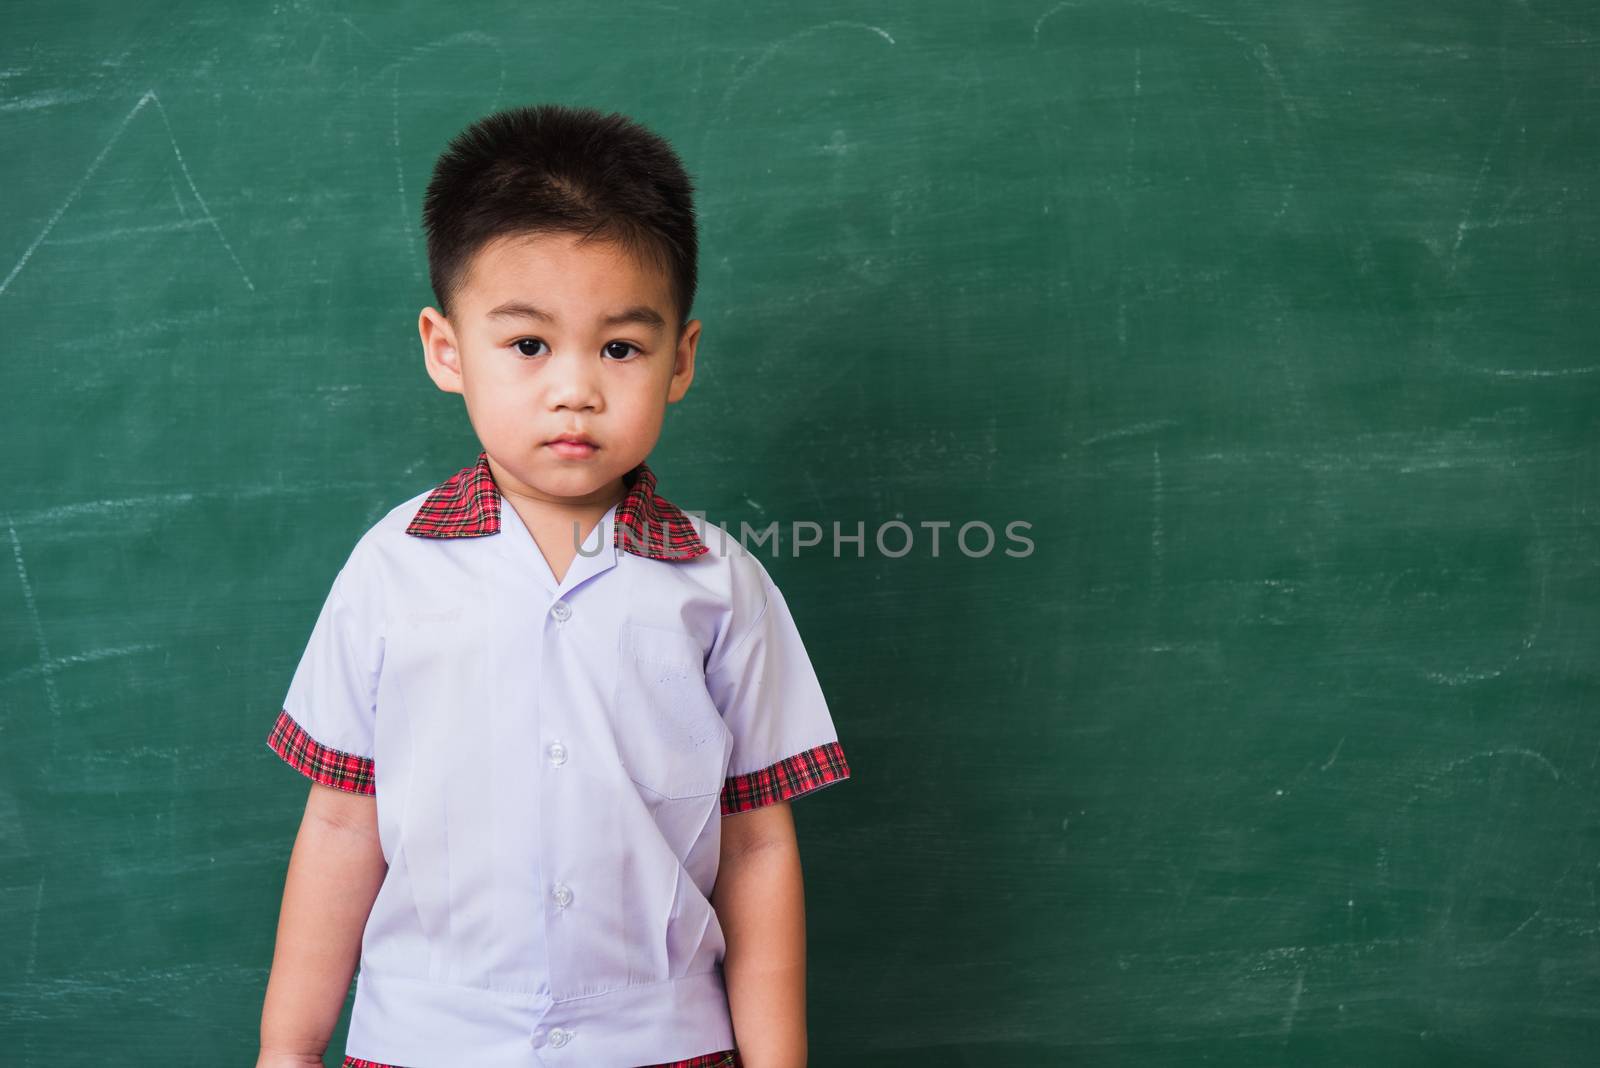 child from kindergarten in student uniform smiling on green scho by Sorapop